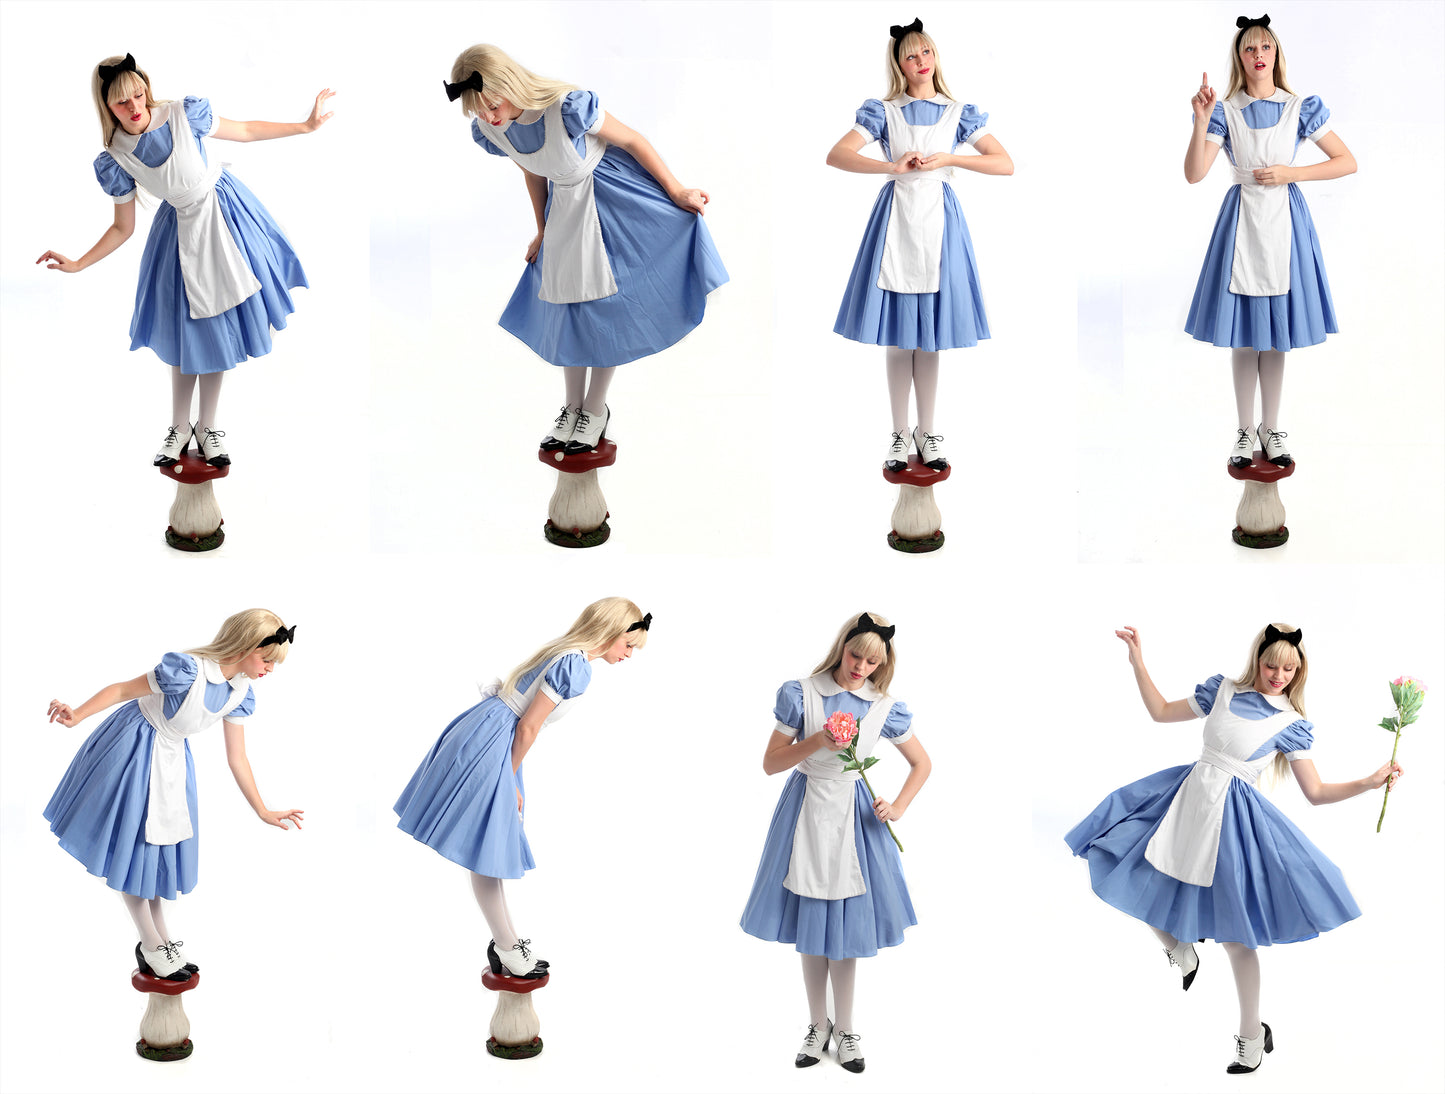 Alice in Wonderland - Stock model pose reference pack